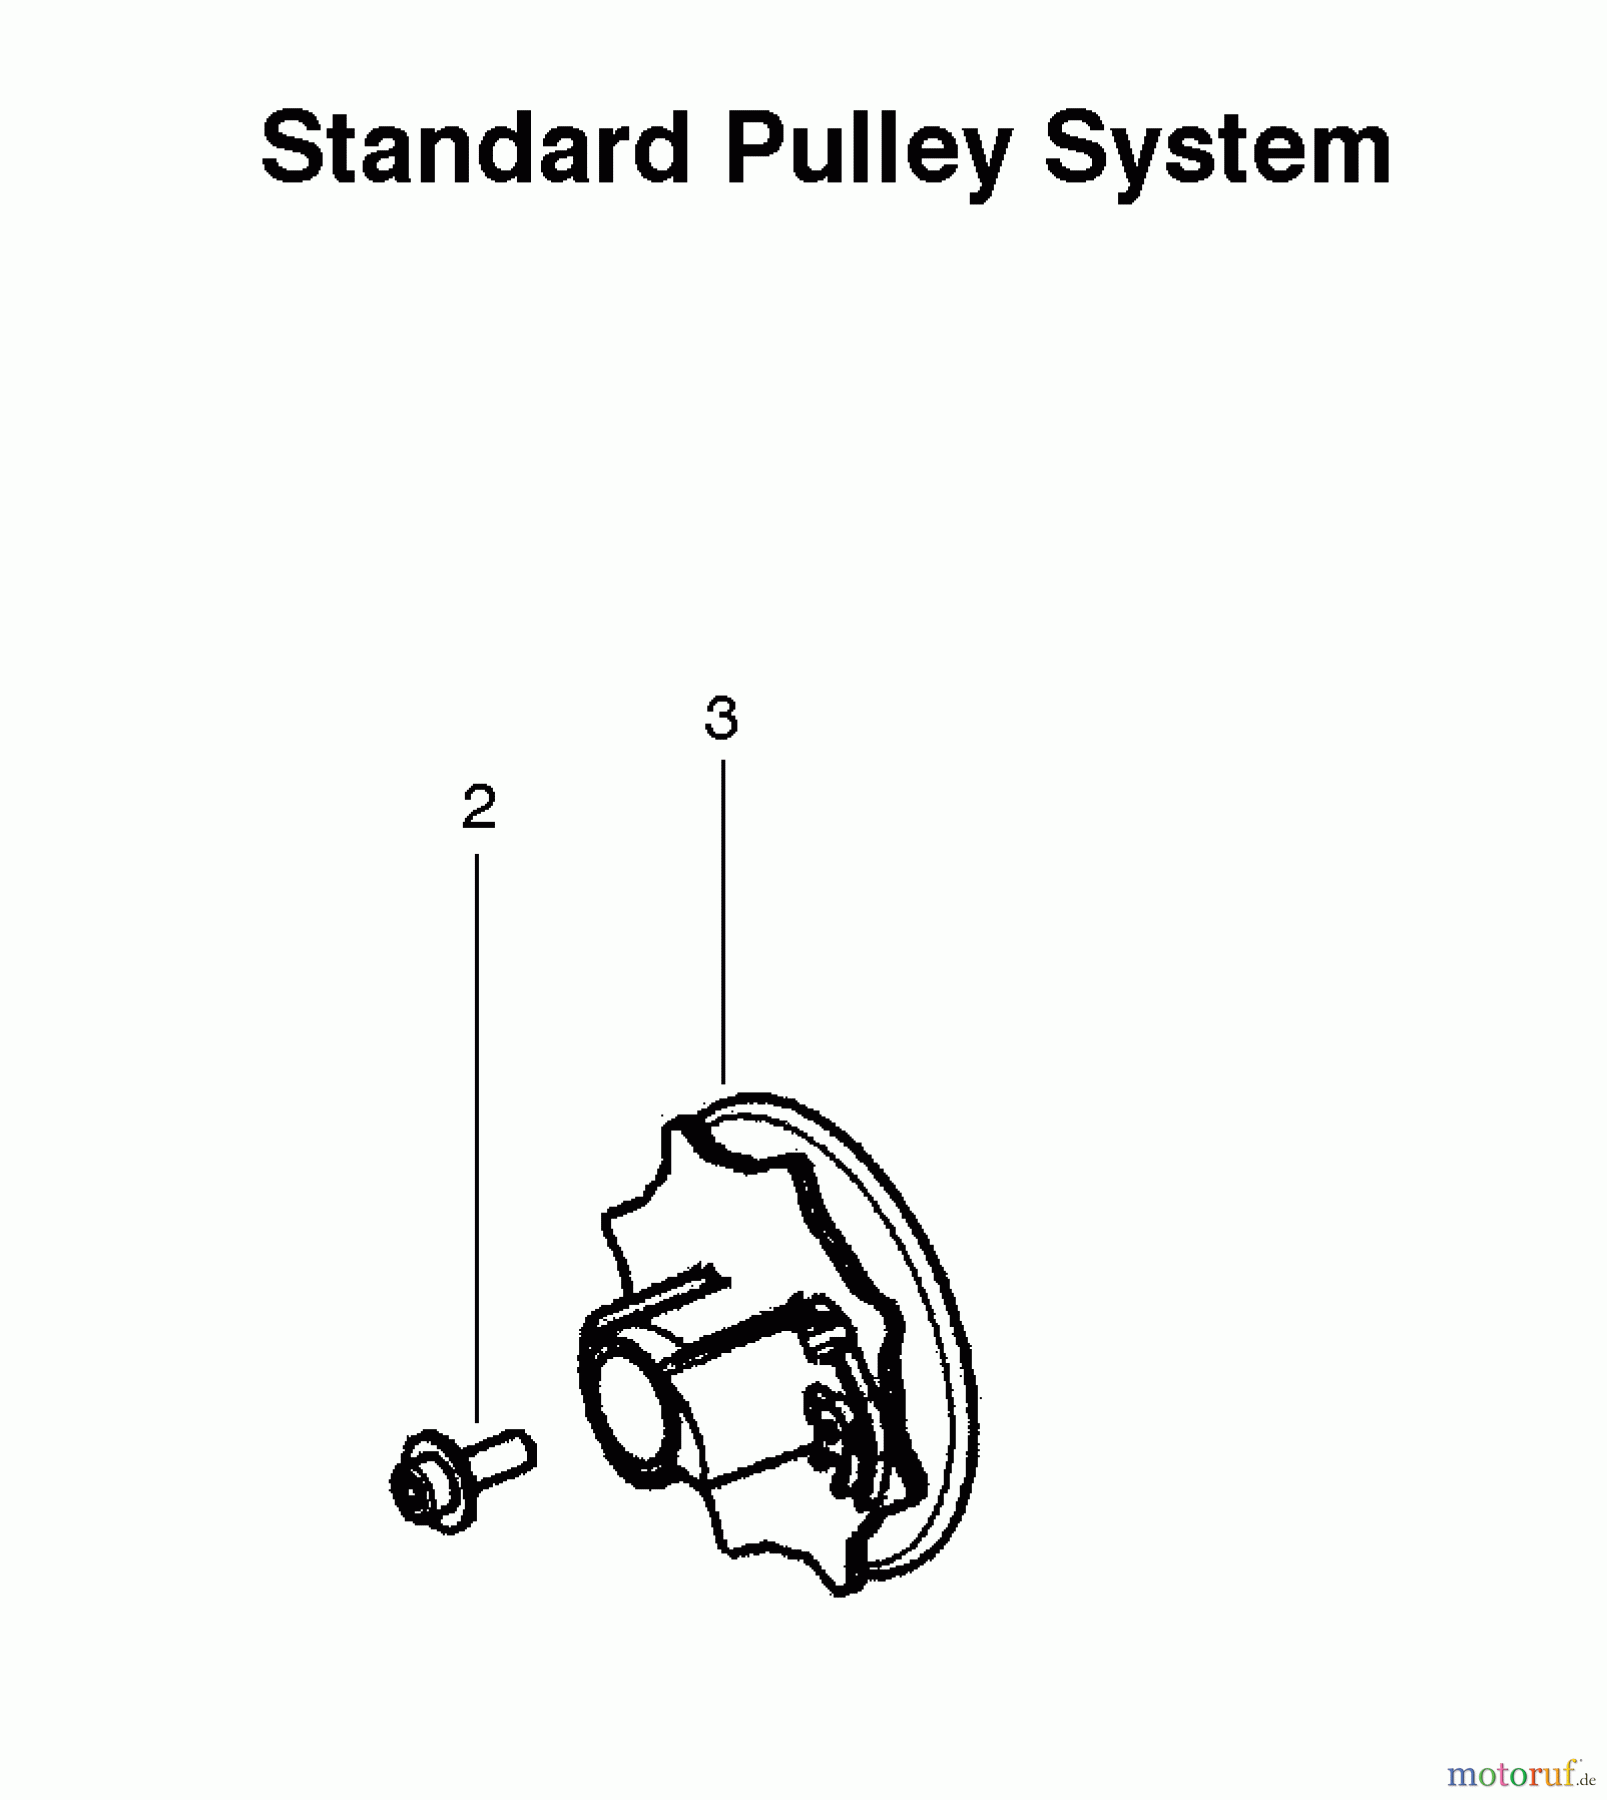  Poulan / Weed Eater Motorsägen P3314WS (Type 1) - Poulan Woodshark Chainsaw Standard Pulley System